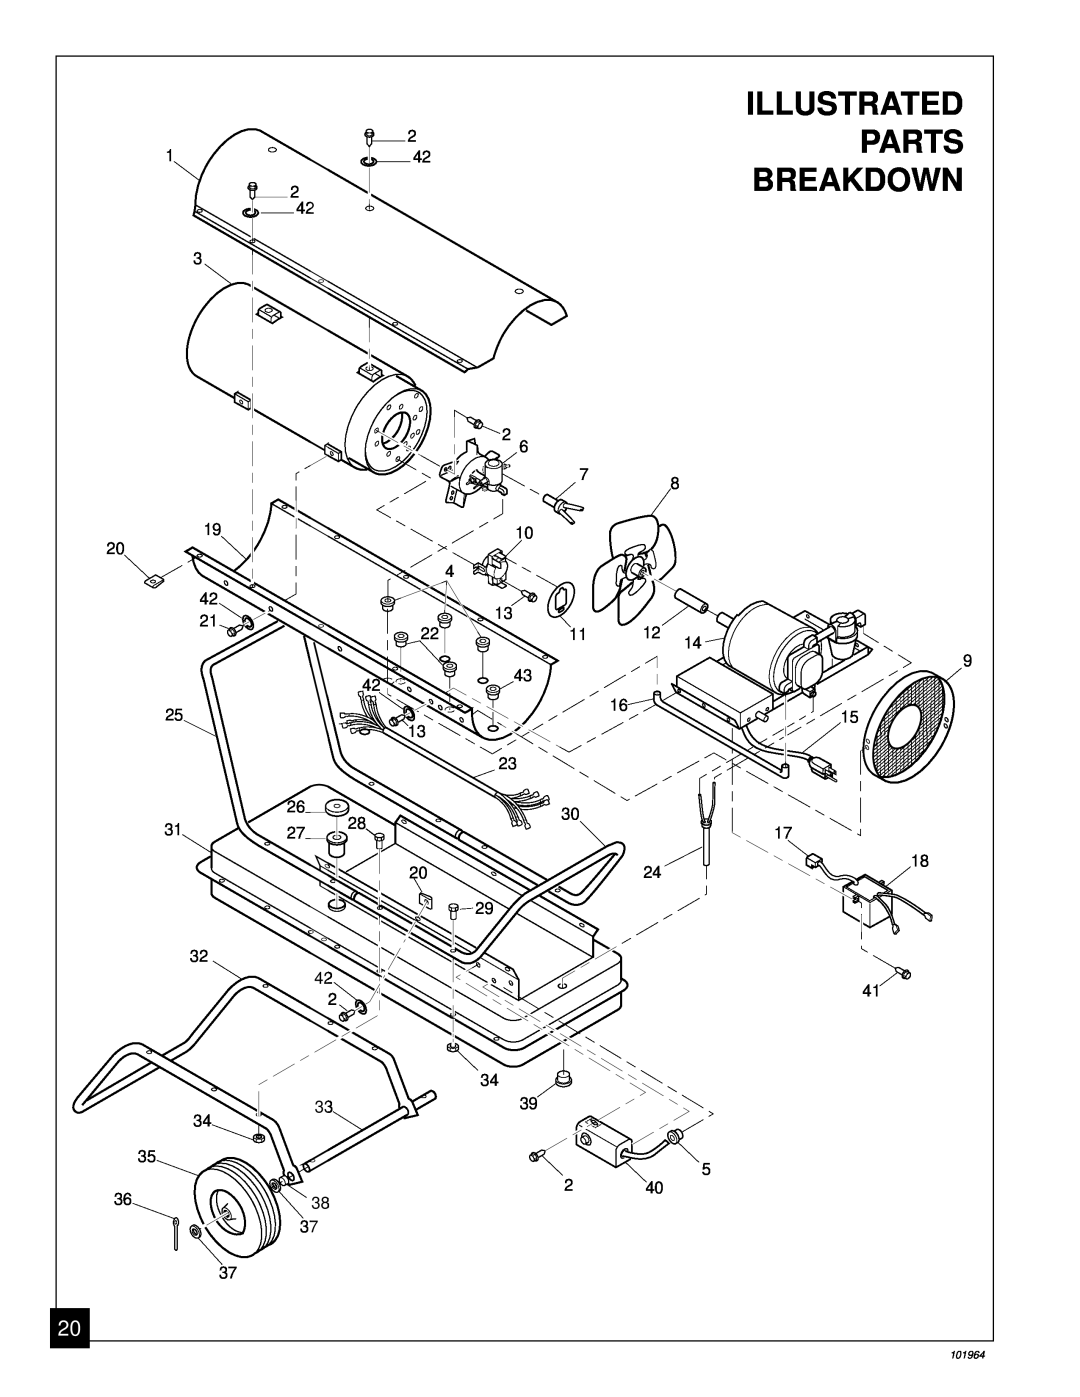 Desa B350CE owner manual Illustrated, Parts, Breakdown 